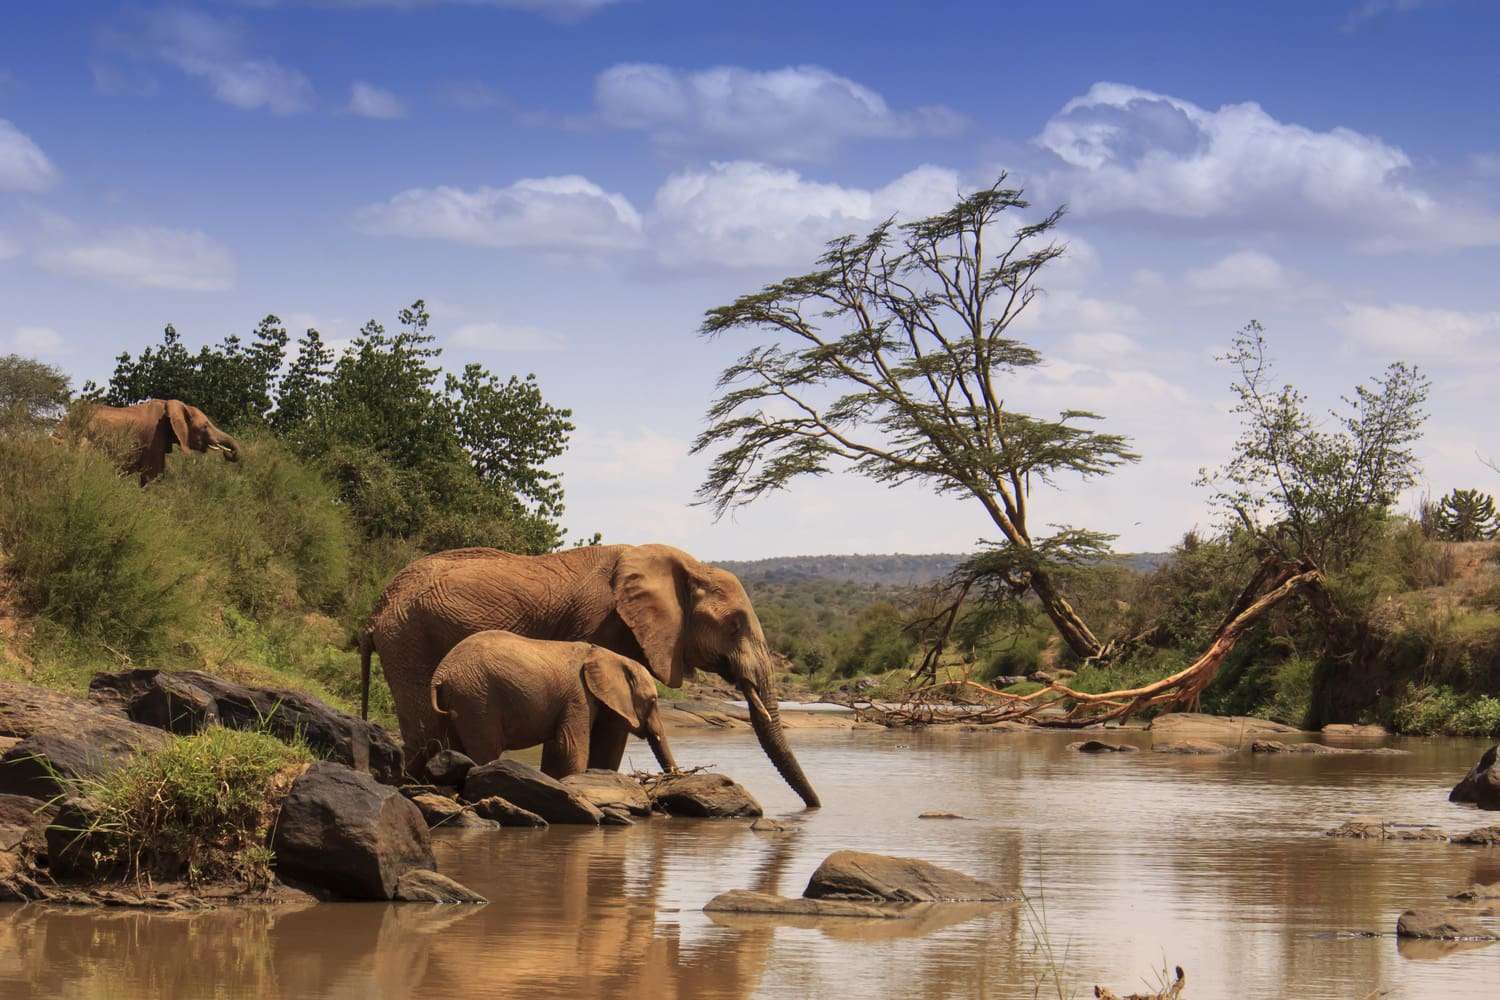 The Samburu National Reserve is a game reserve on the banks of the Ewaso Ng'iro river in Kenya. 